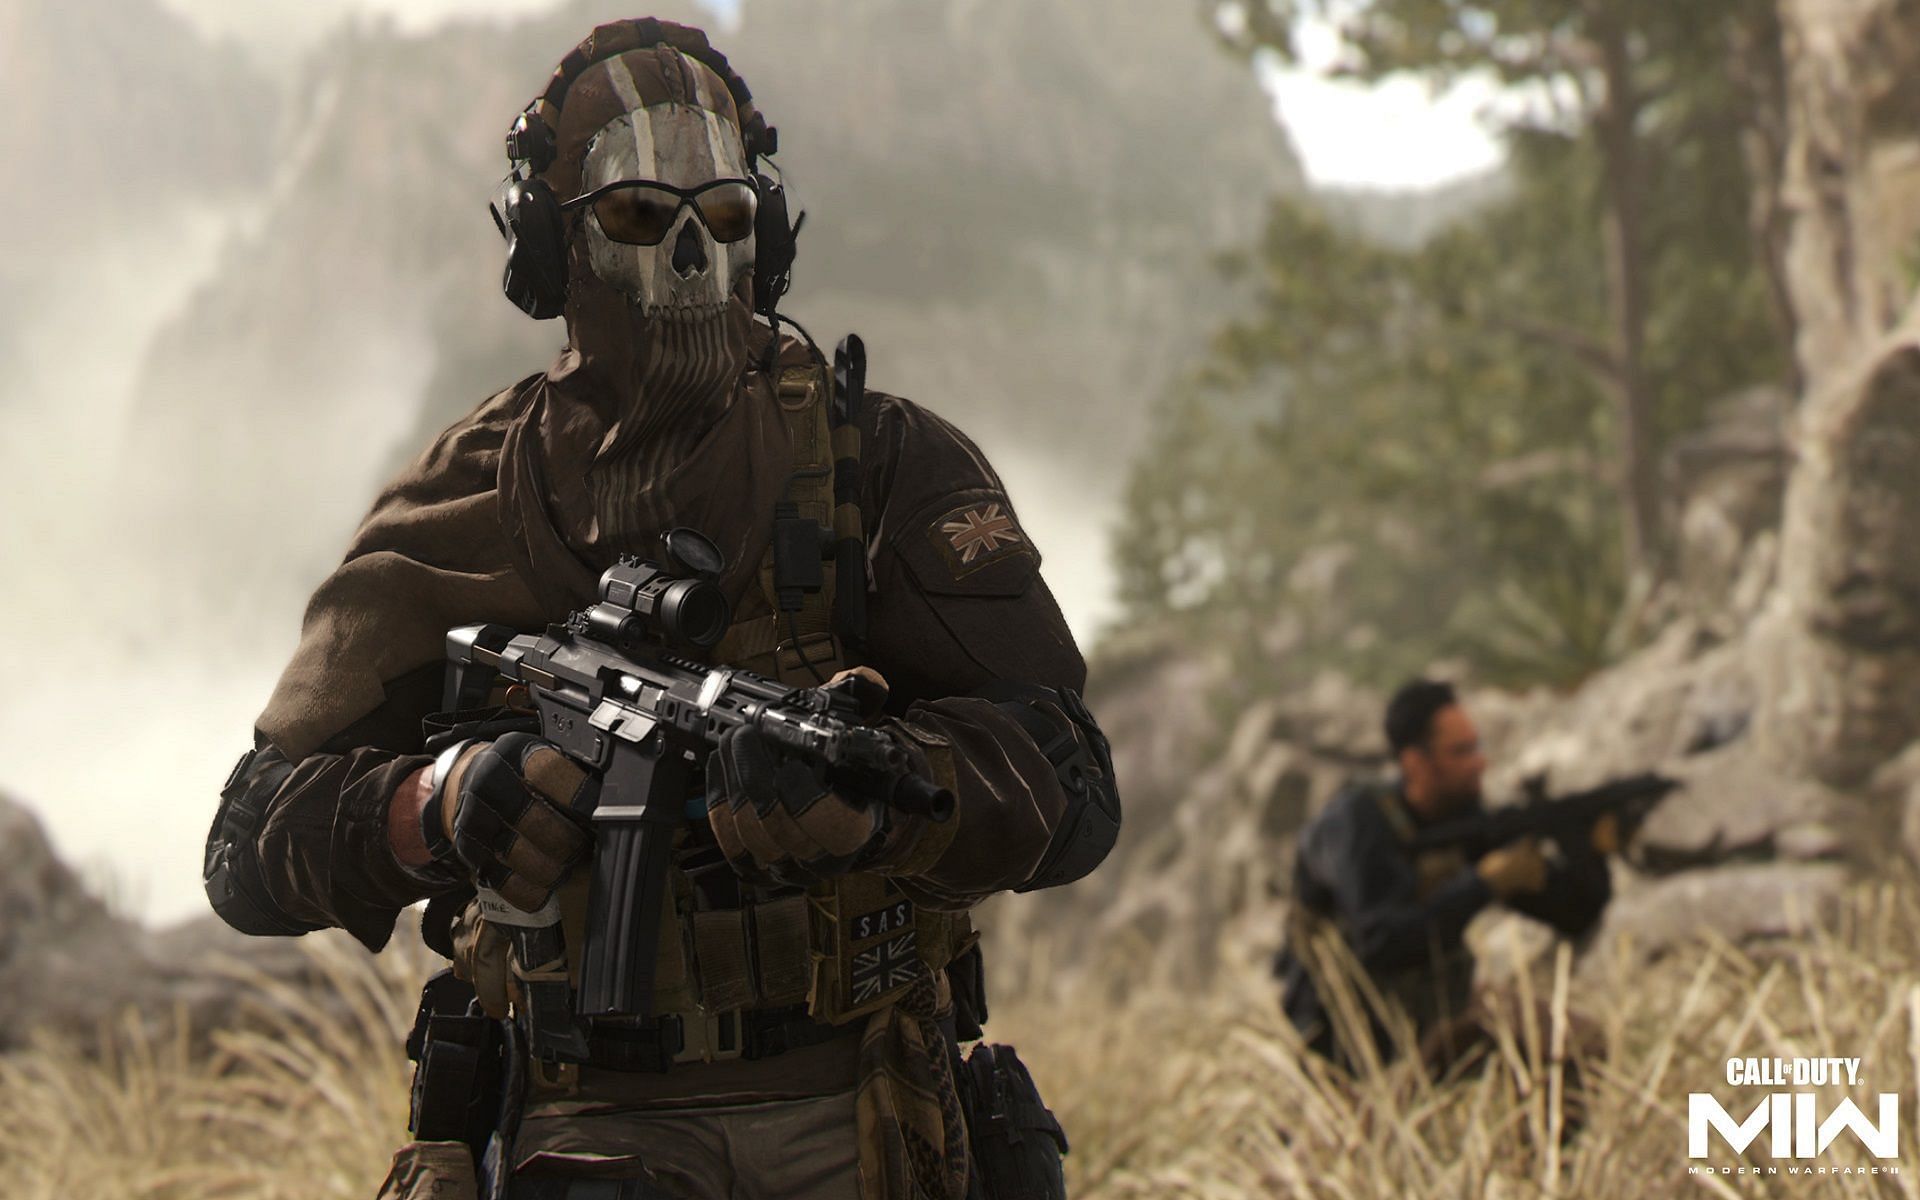 Ghost from Modern Warfare 2 (image via Sportskeeda)